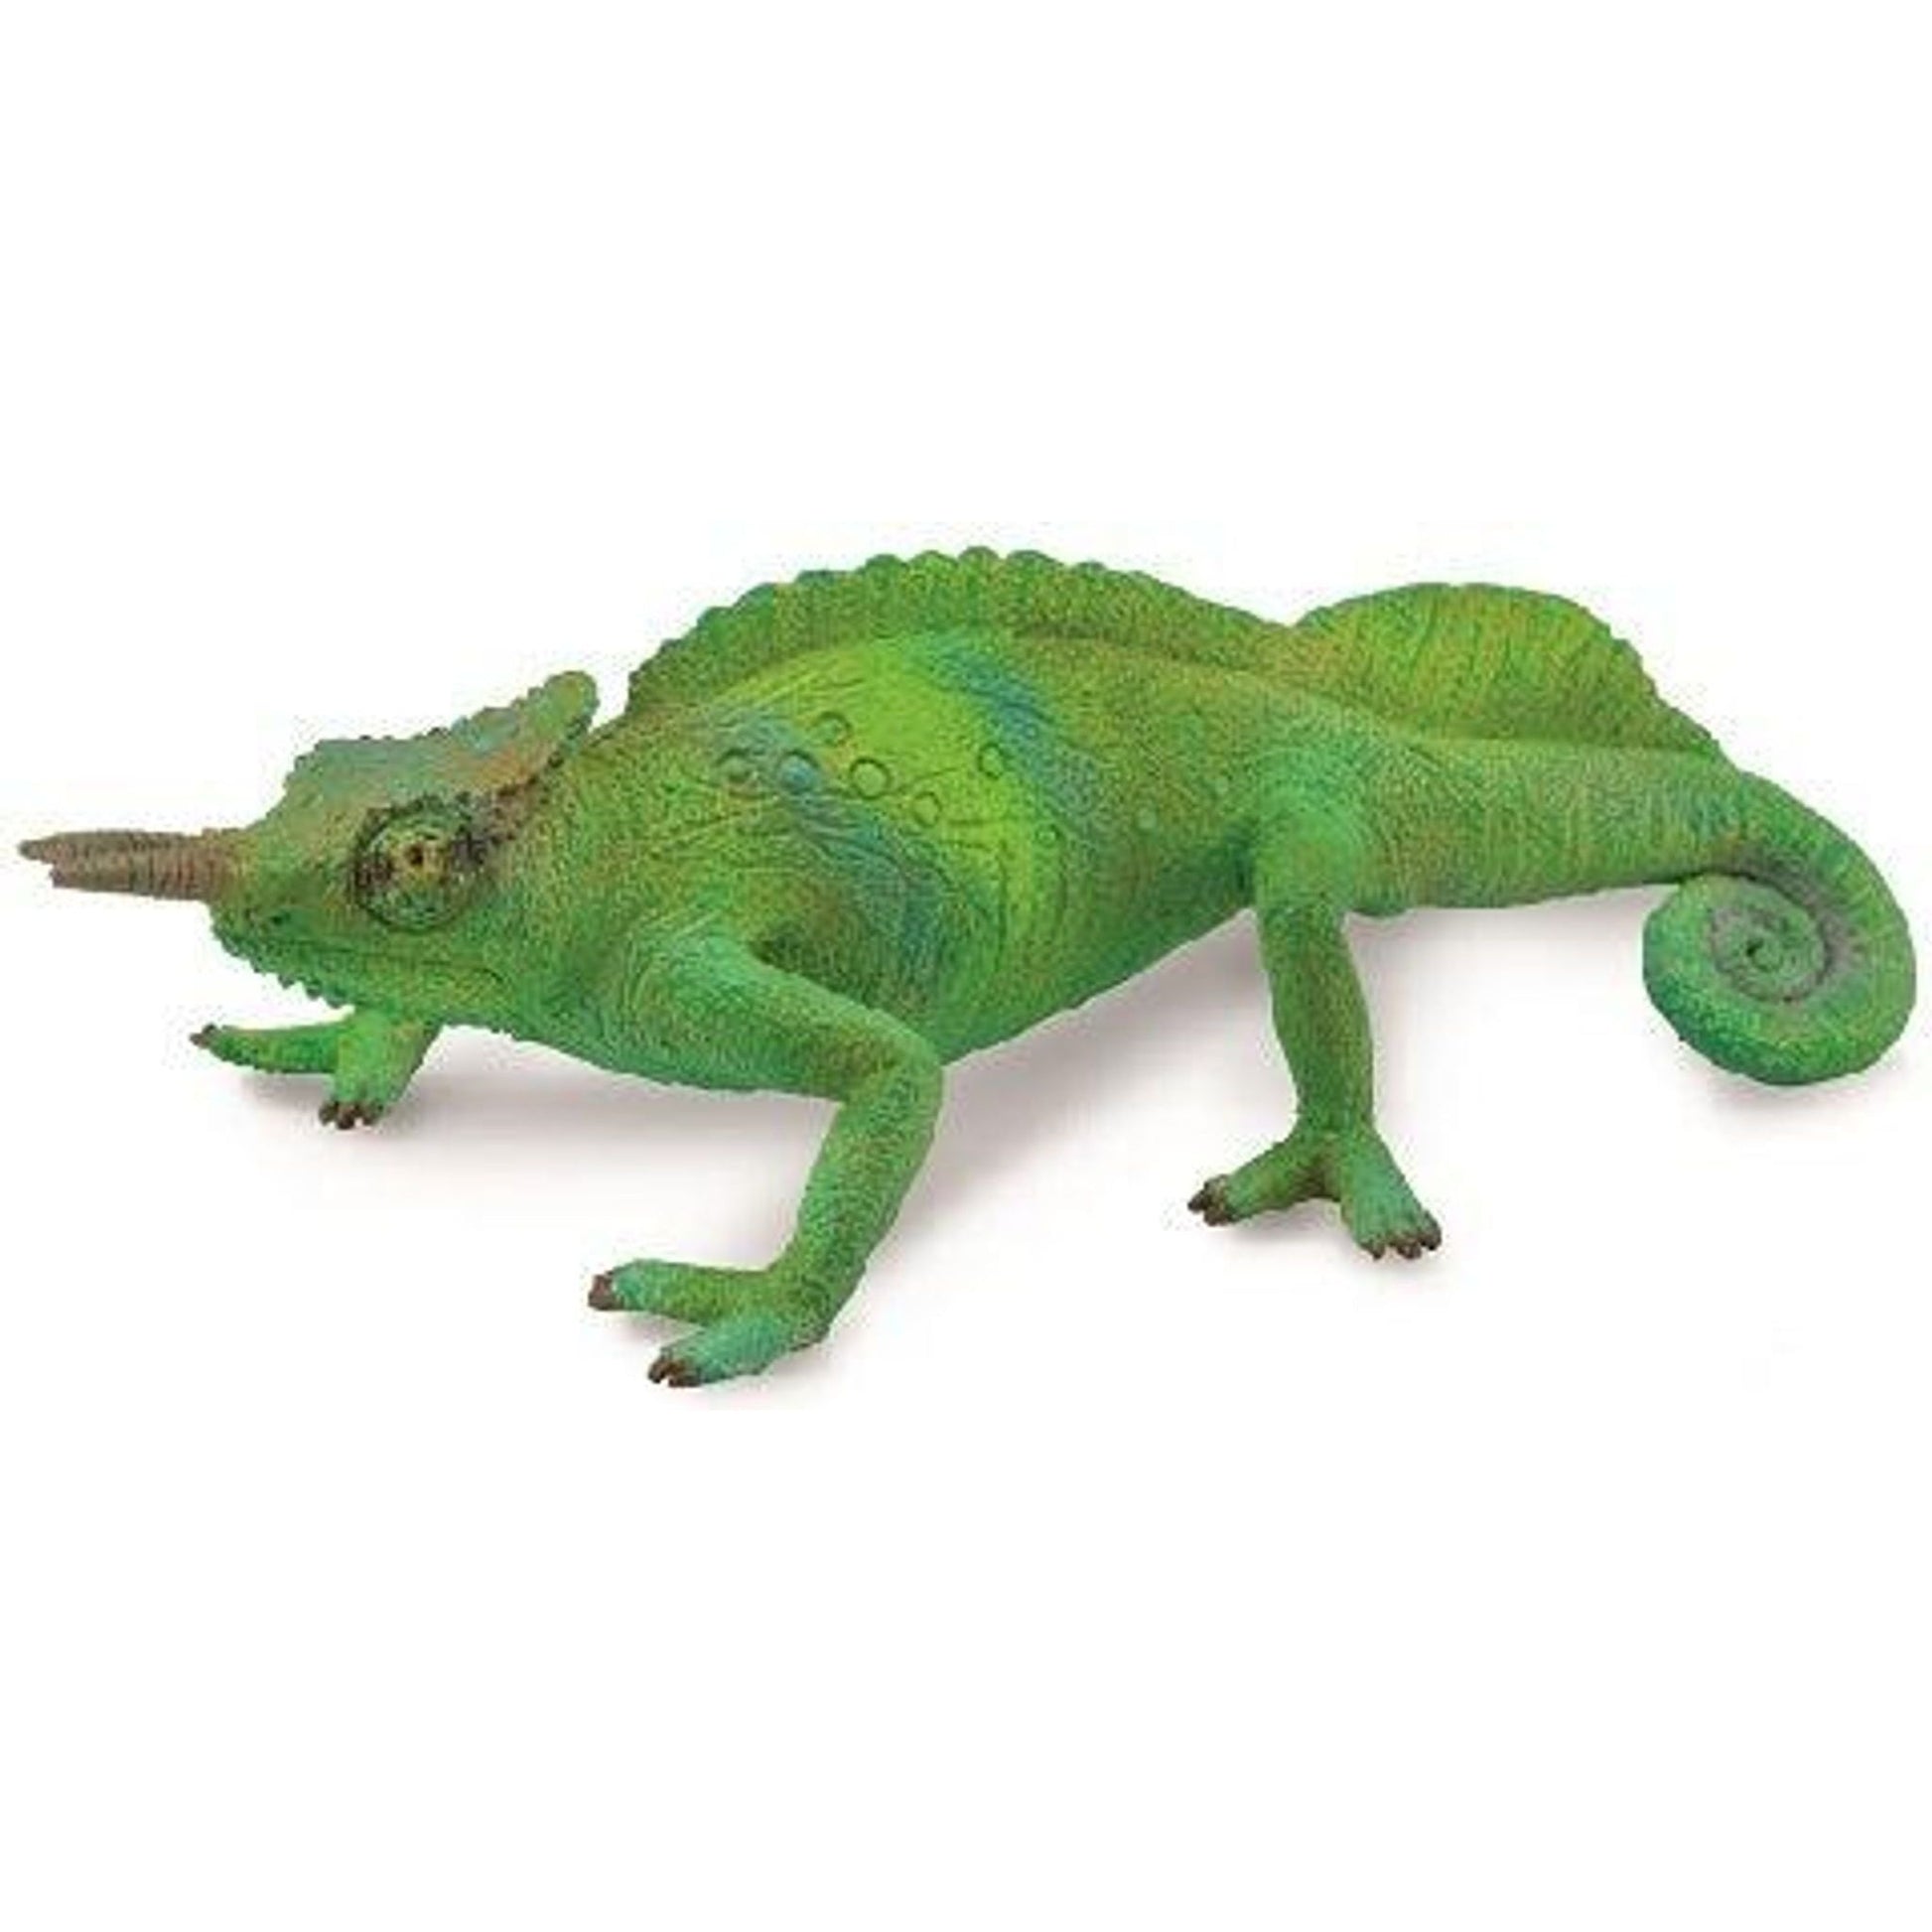 Cameroon Sailfin Chameleon (L) - Toybox Tales